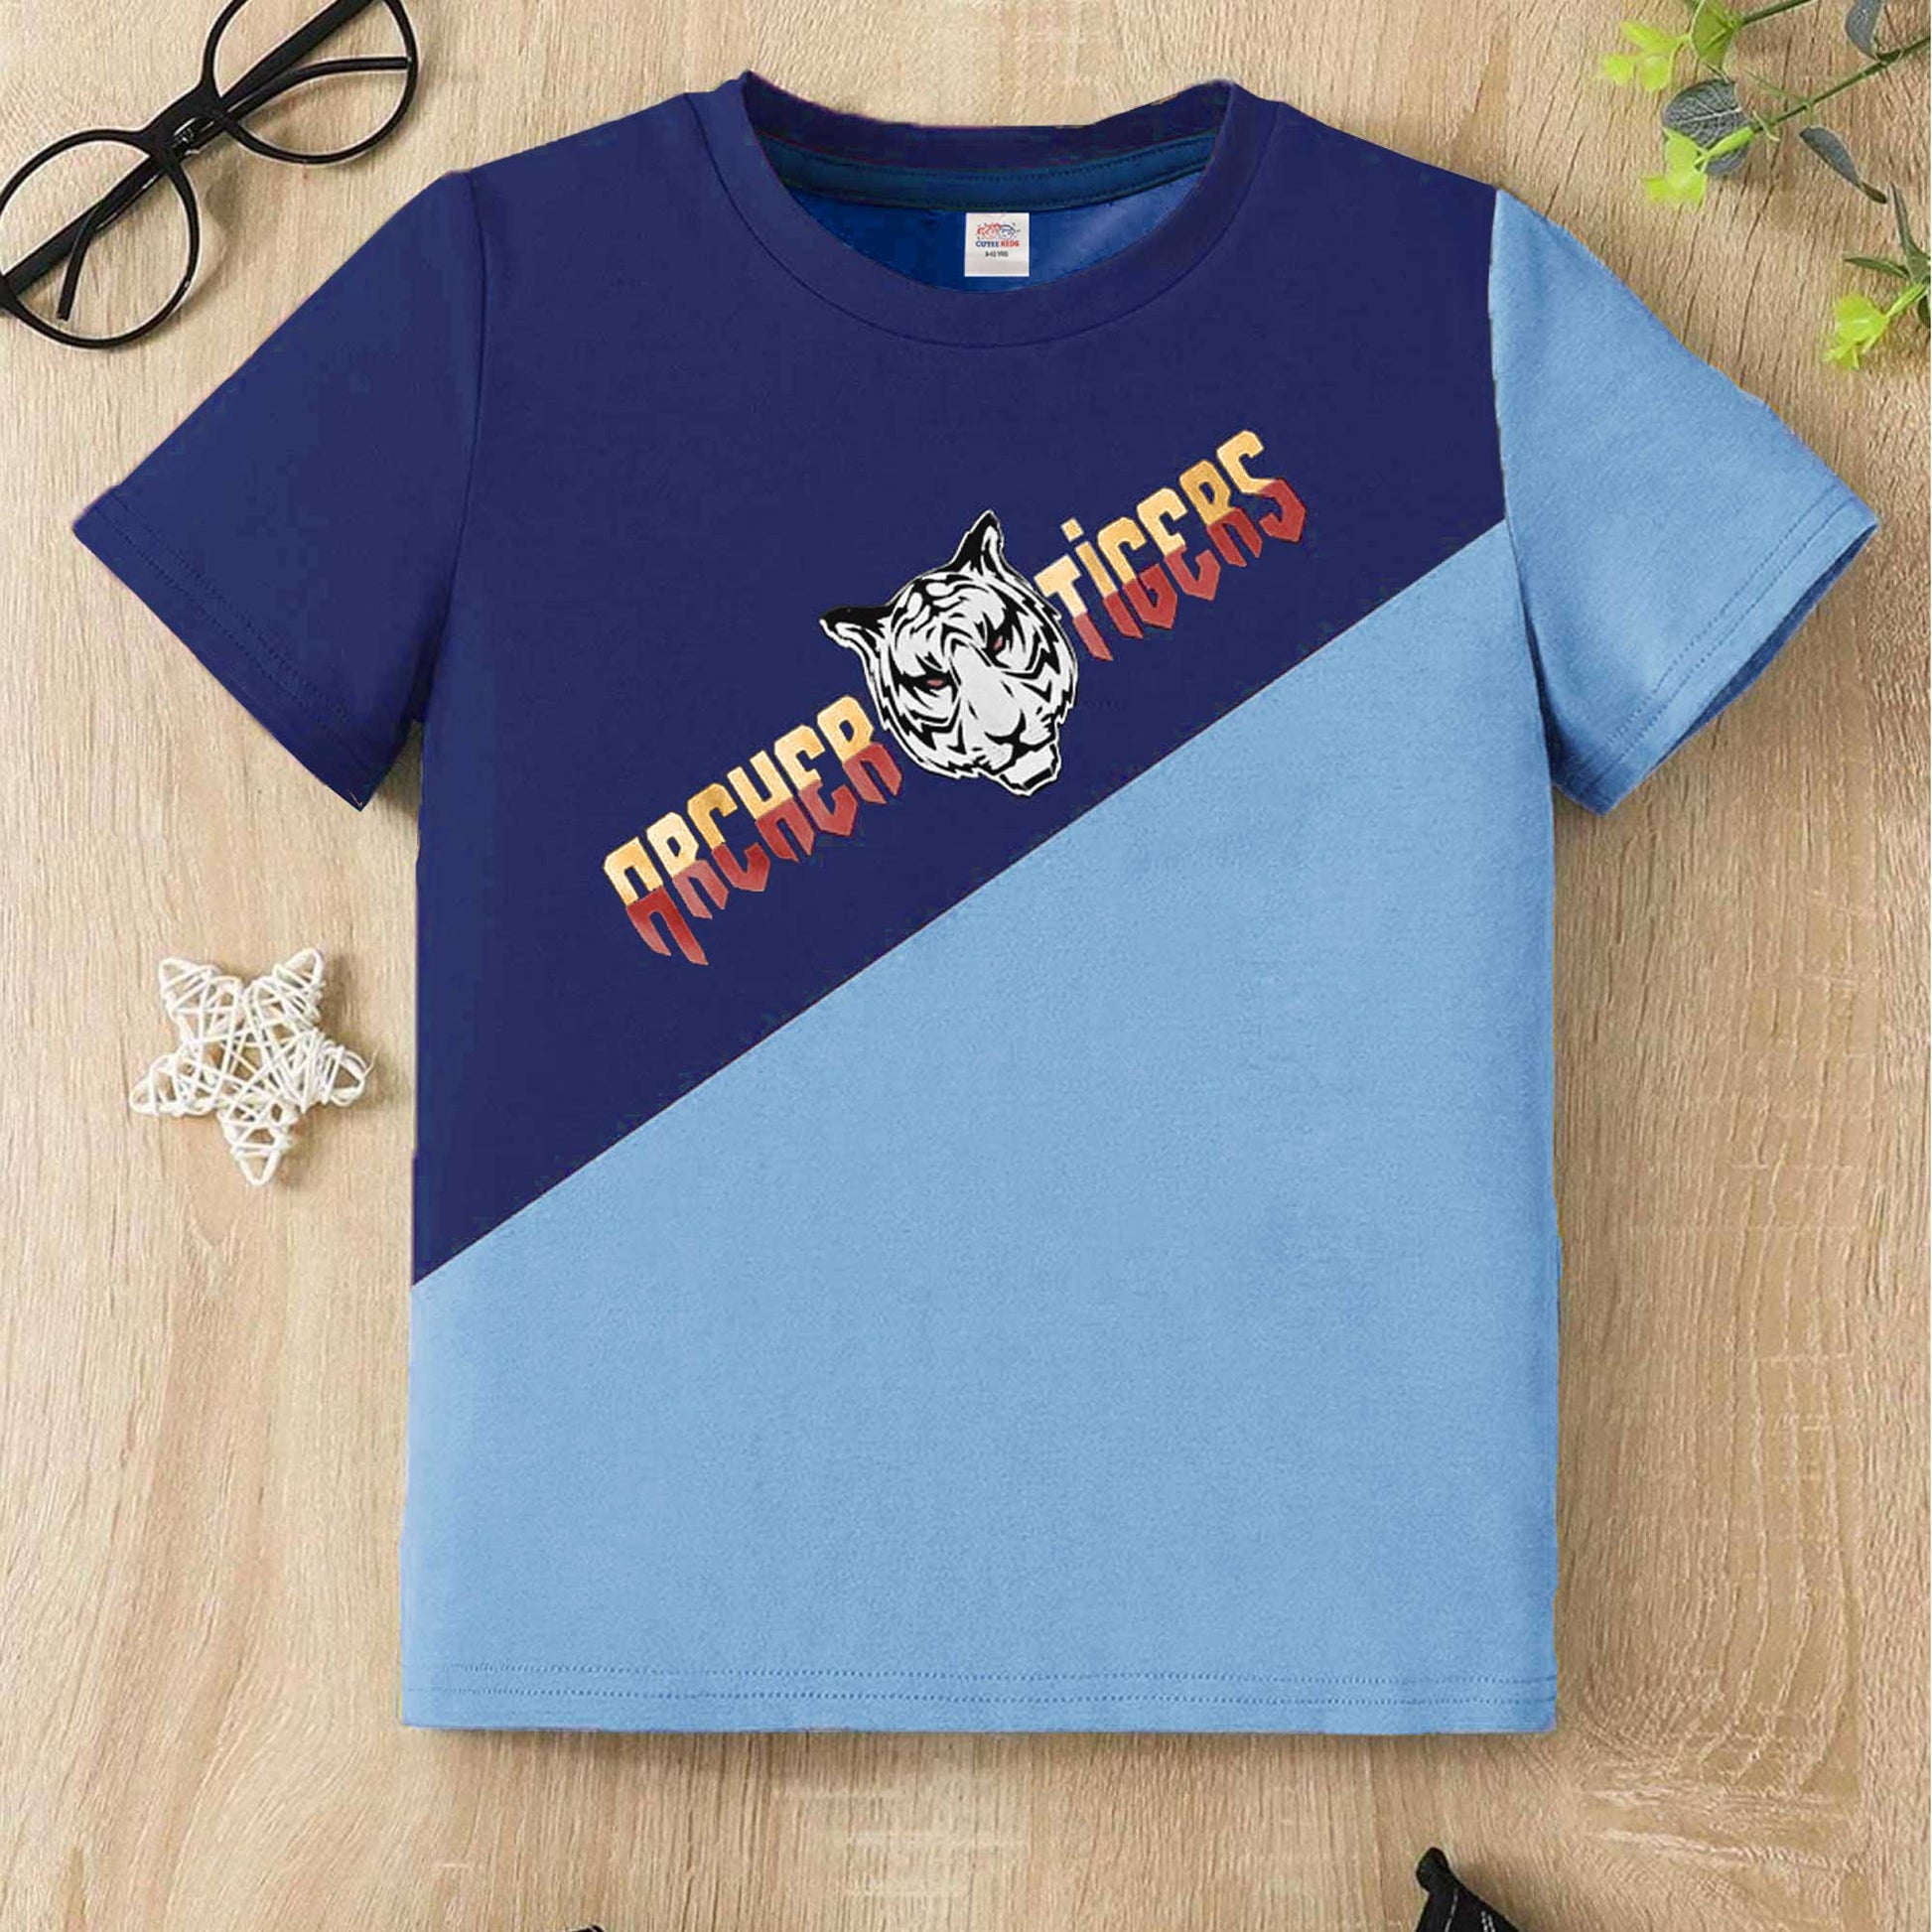 Cutie Kid's Archer Tiger Printed Panel Design Tee Shirt Boy's Tee Shirt ZBC Navy & Sky 1-2 Years 